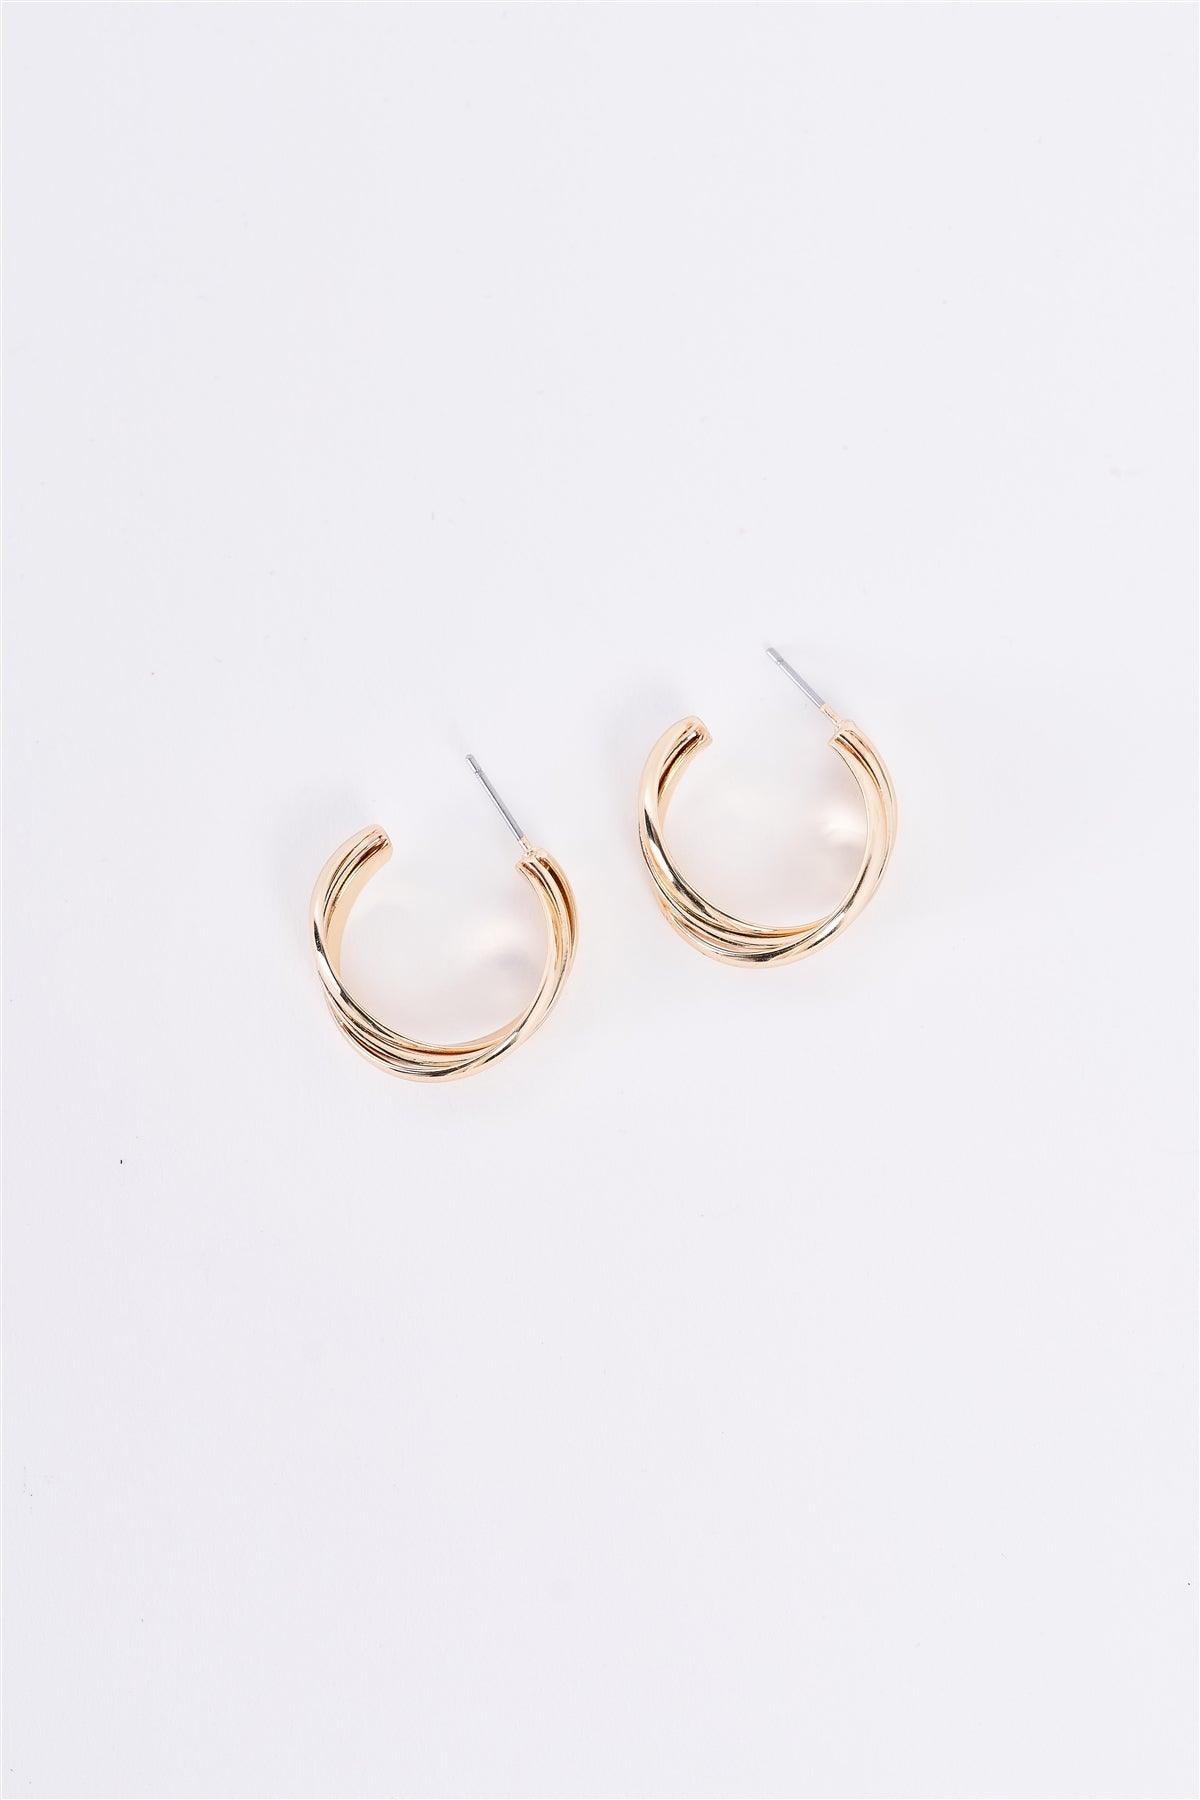 Gold Twisted Triple Small Hoop Earrings /3 Pairs